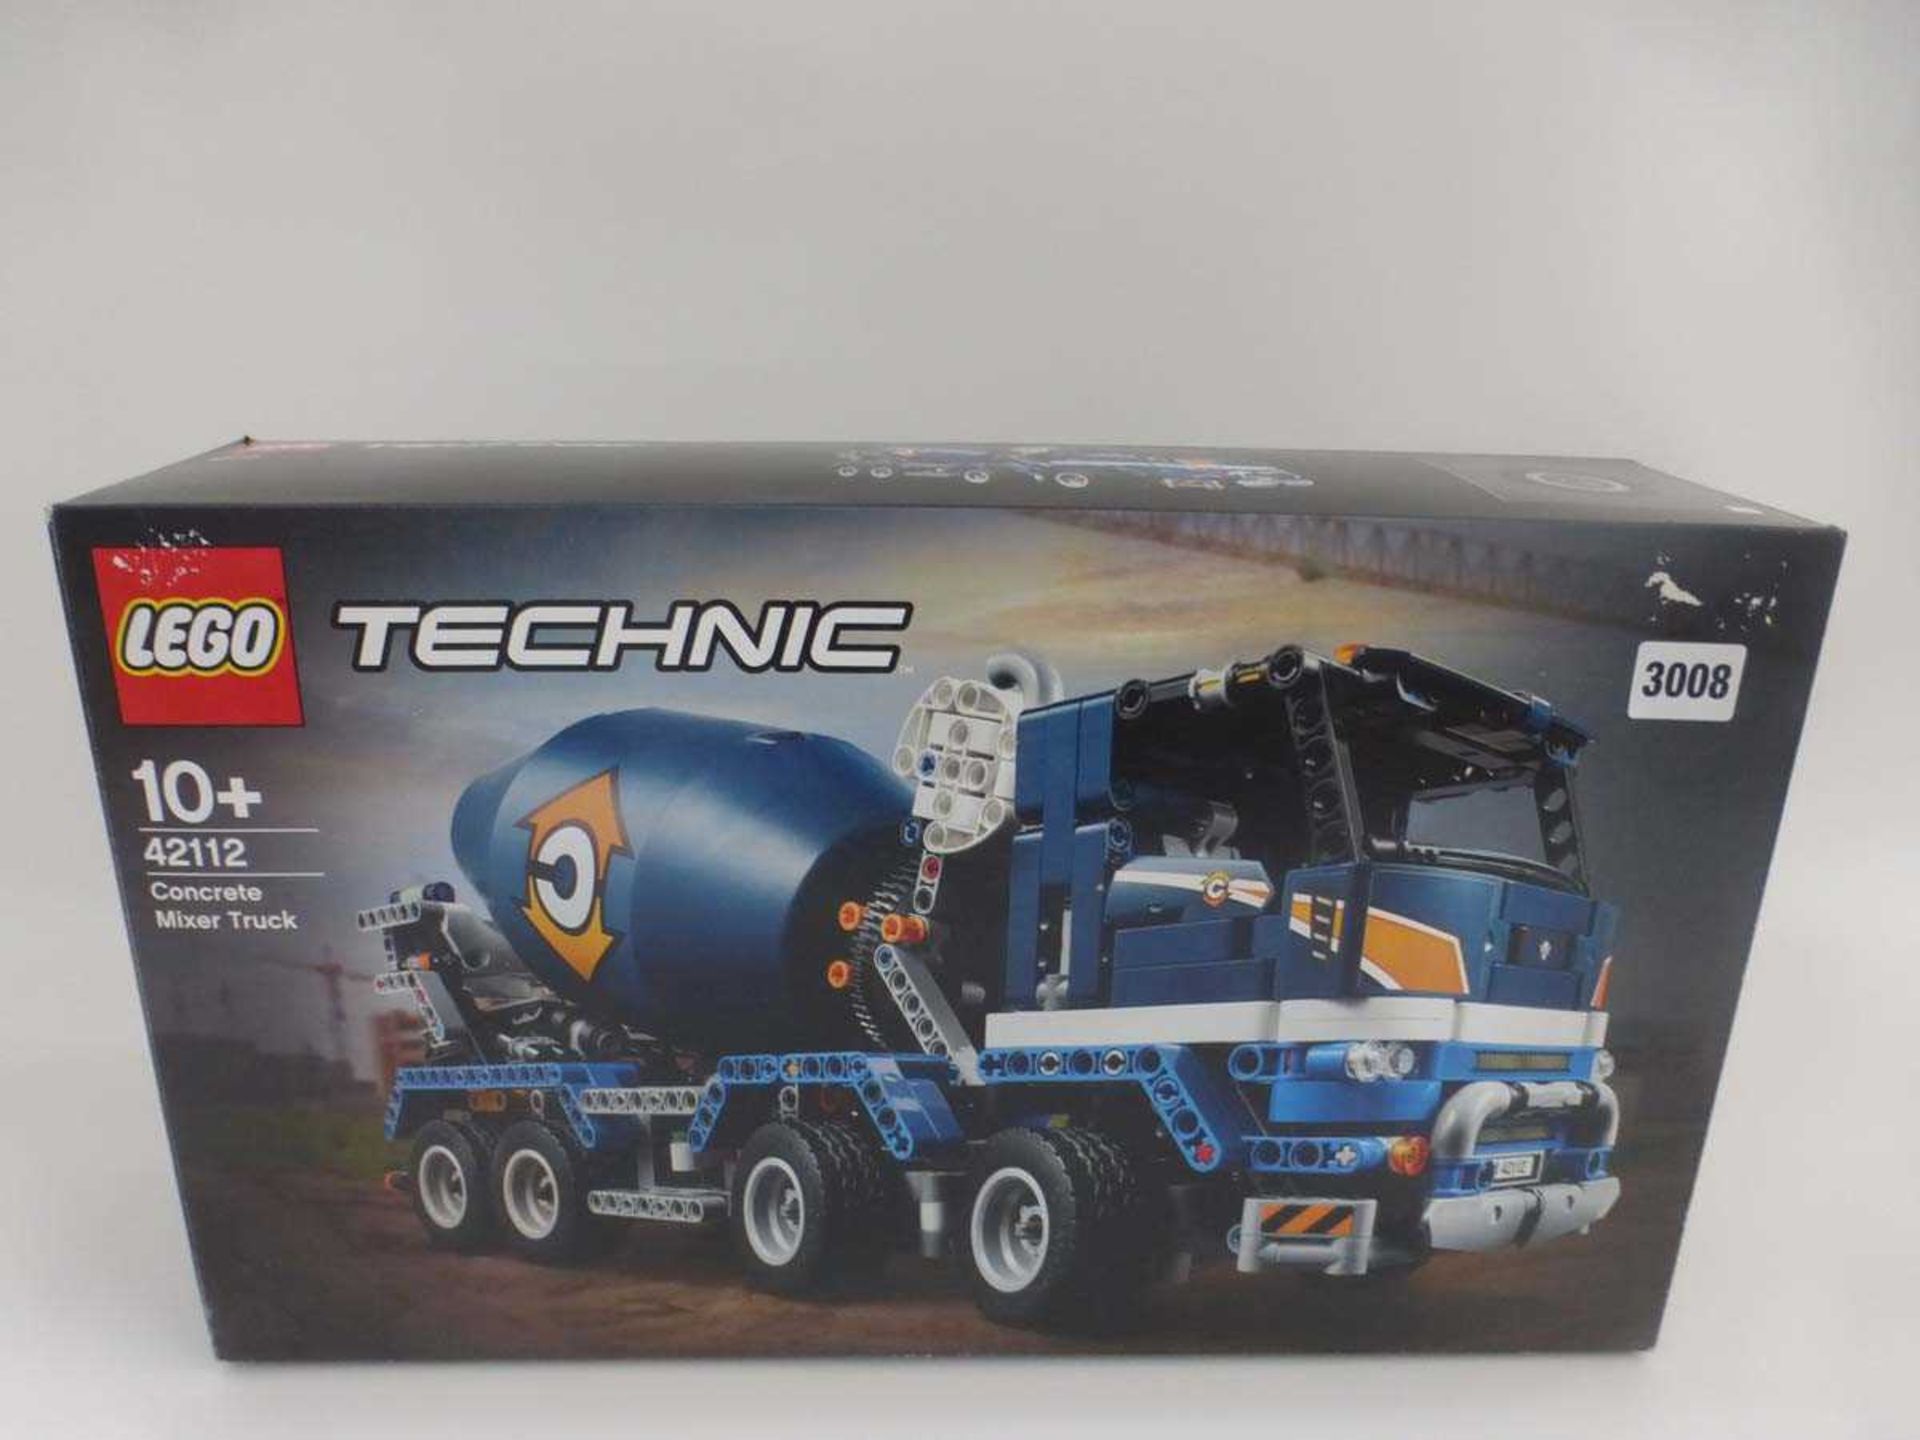 A Lego Technic 42112 Concrete Mixer Truck set, boxedContents unchecked